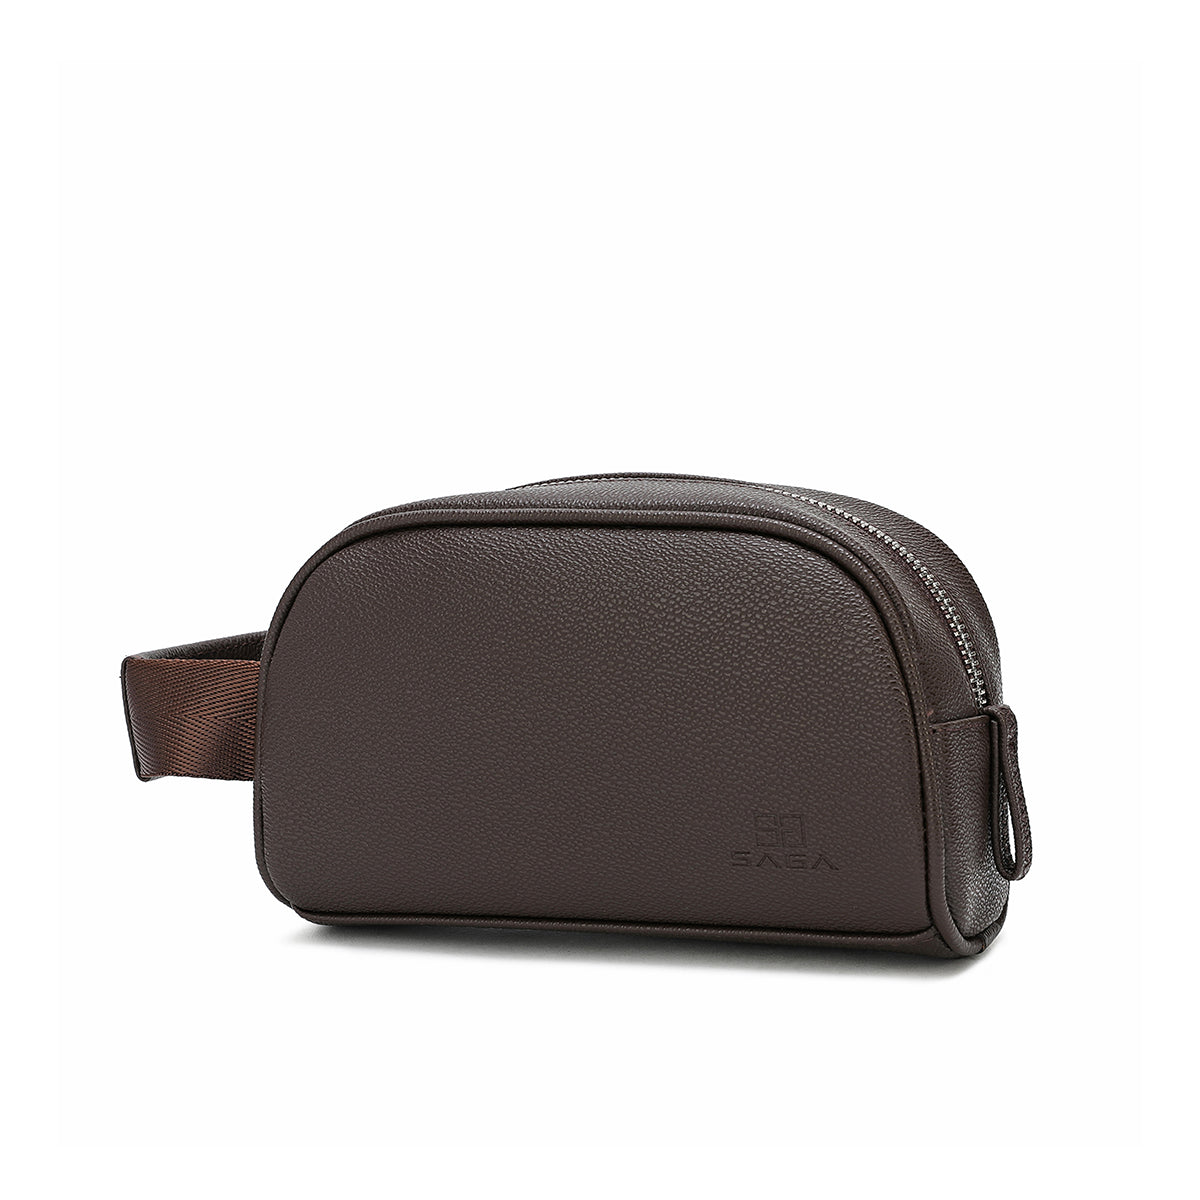 Men's handbag, classic and elegant design, width 19 cm, available in three colors